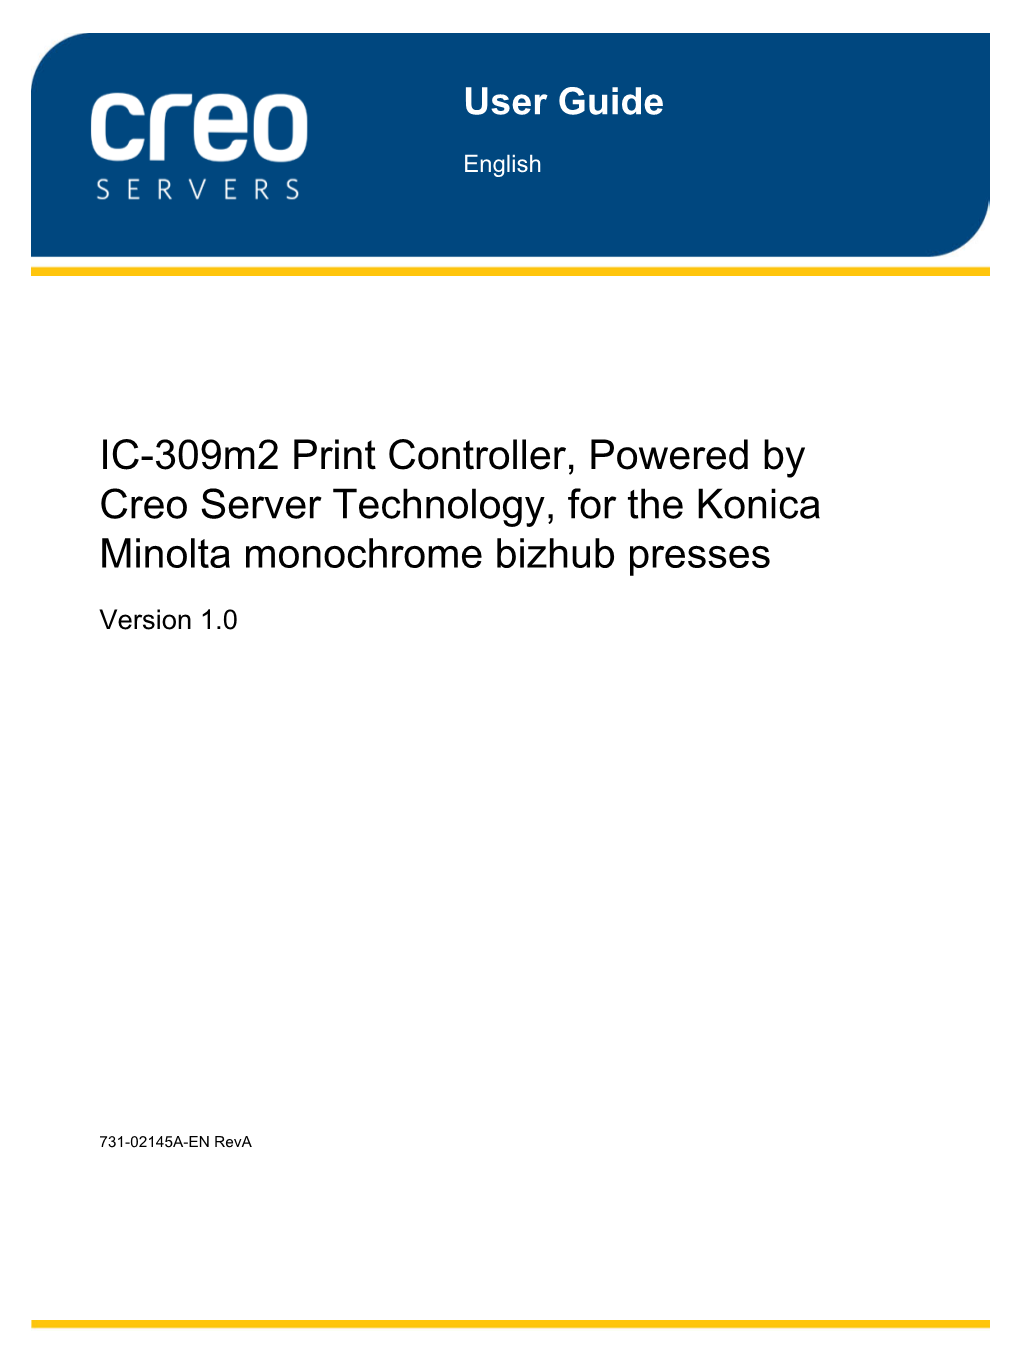 IC-309M2 Print Controller, Powered by Creo Server Technology, for the Konica Minolta Monochrome Bizhub Presses Version 1.0